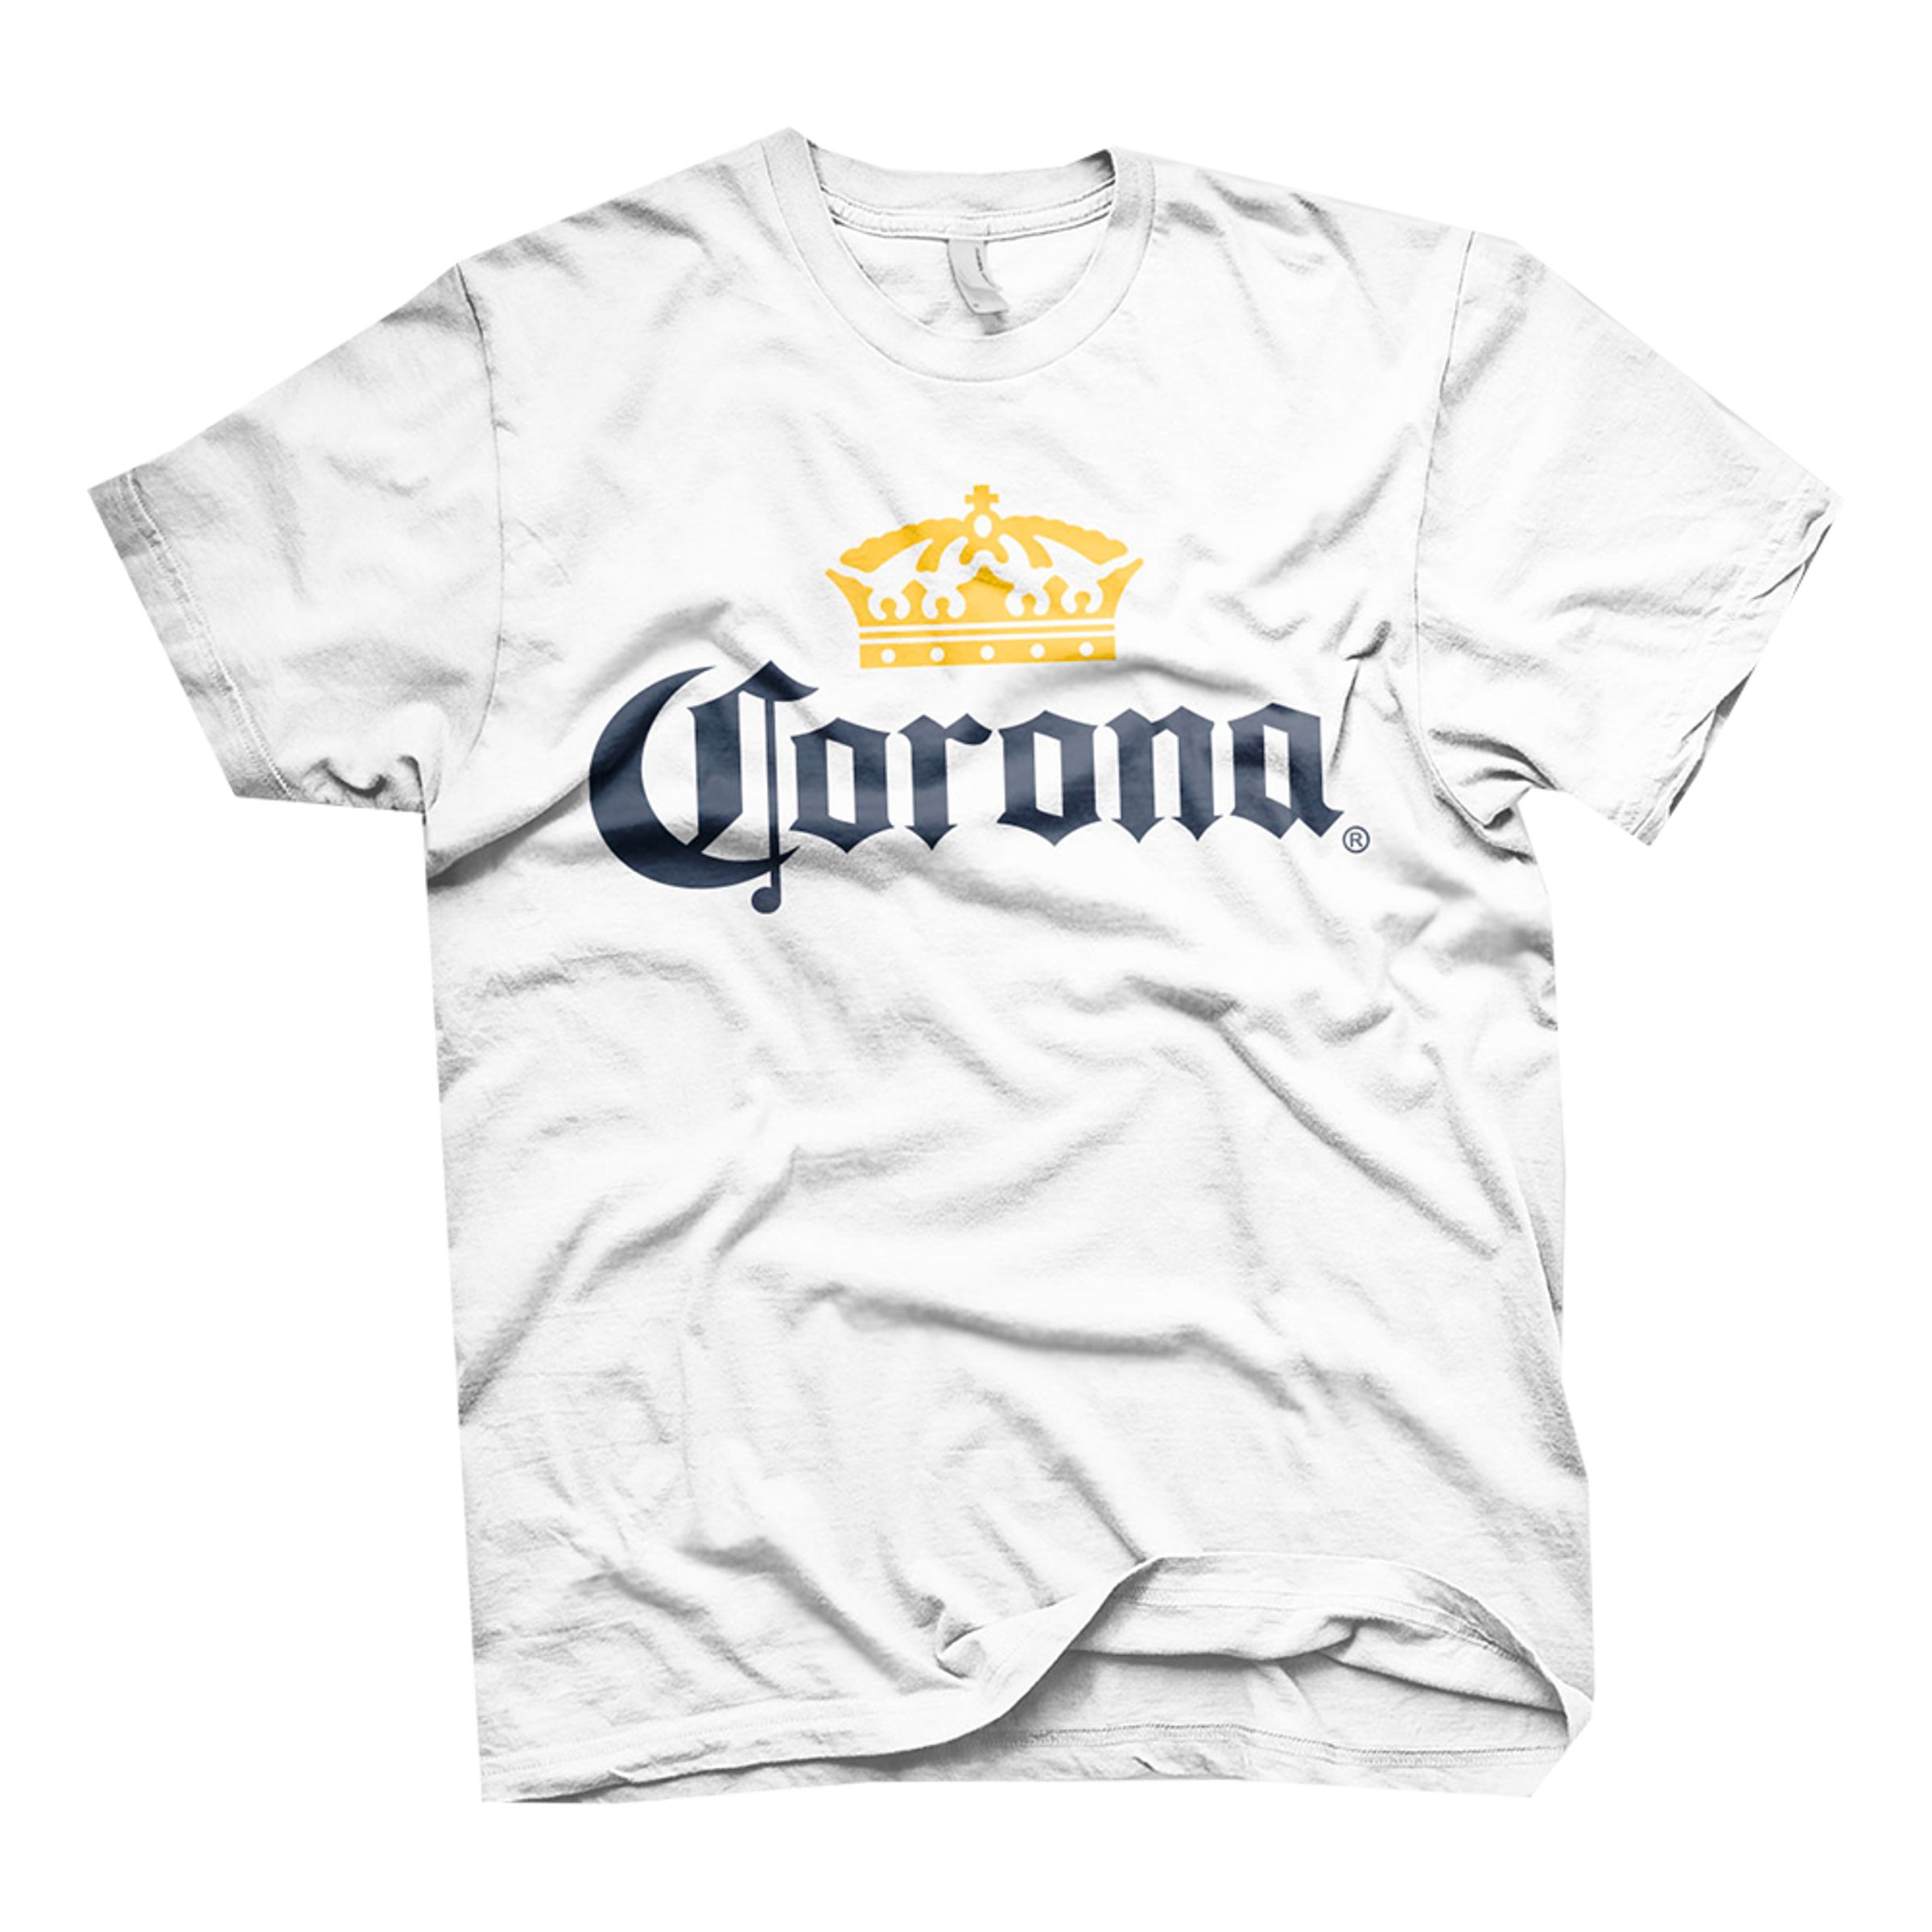 Corona Beer T-shirt - Medium